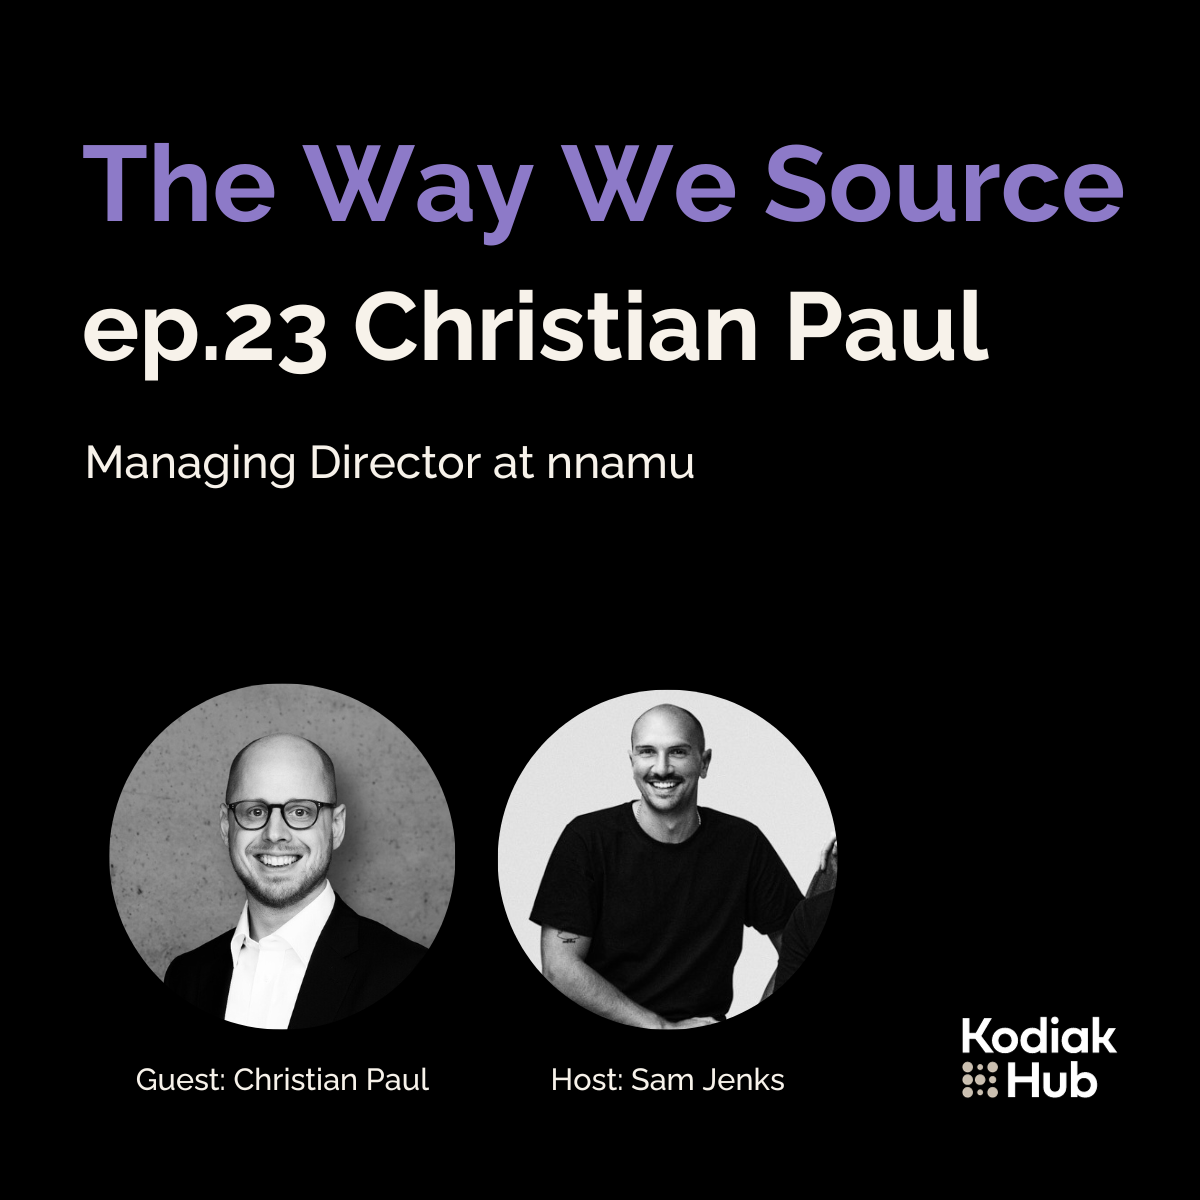 ep.23 Christian Paul - The Way We Source